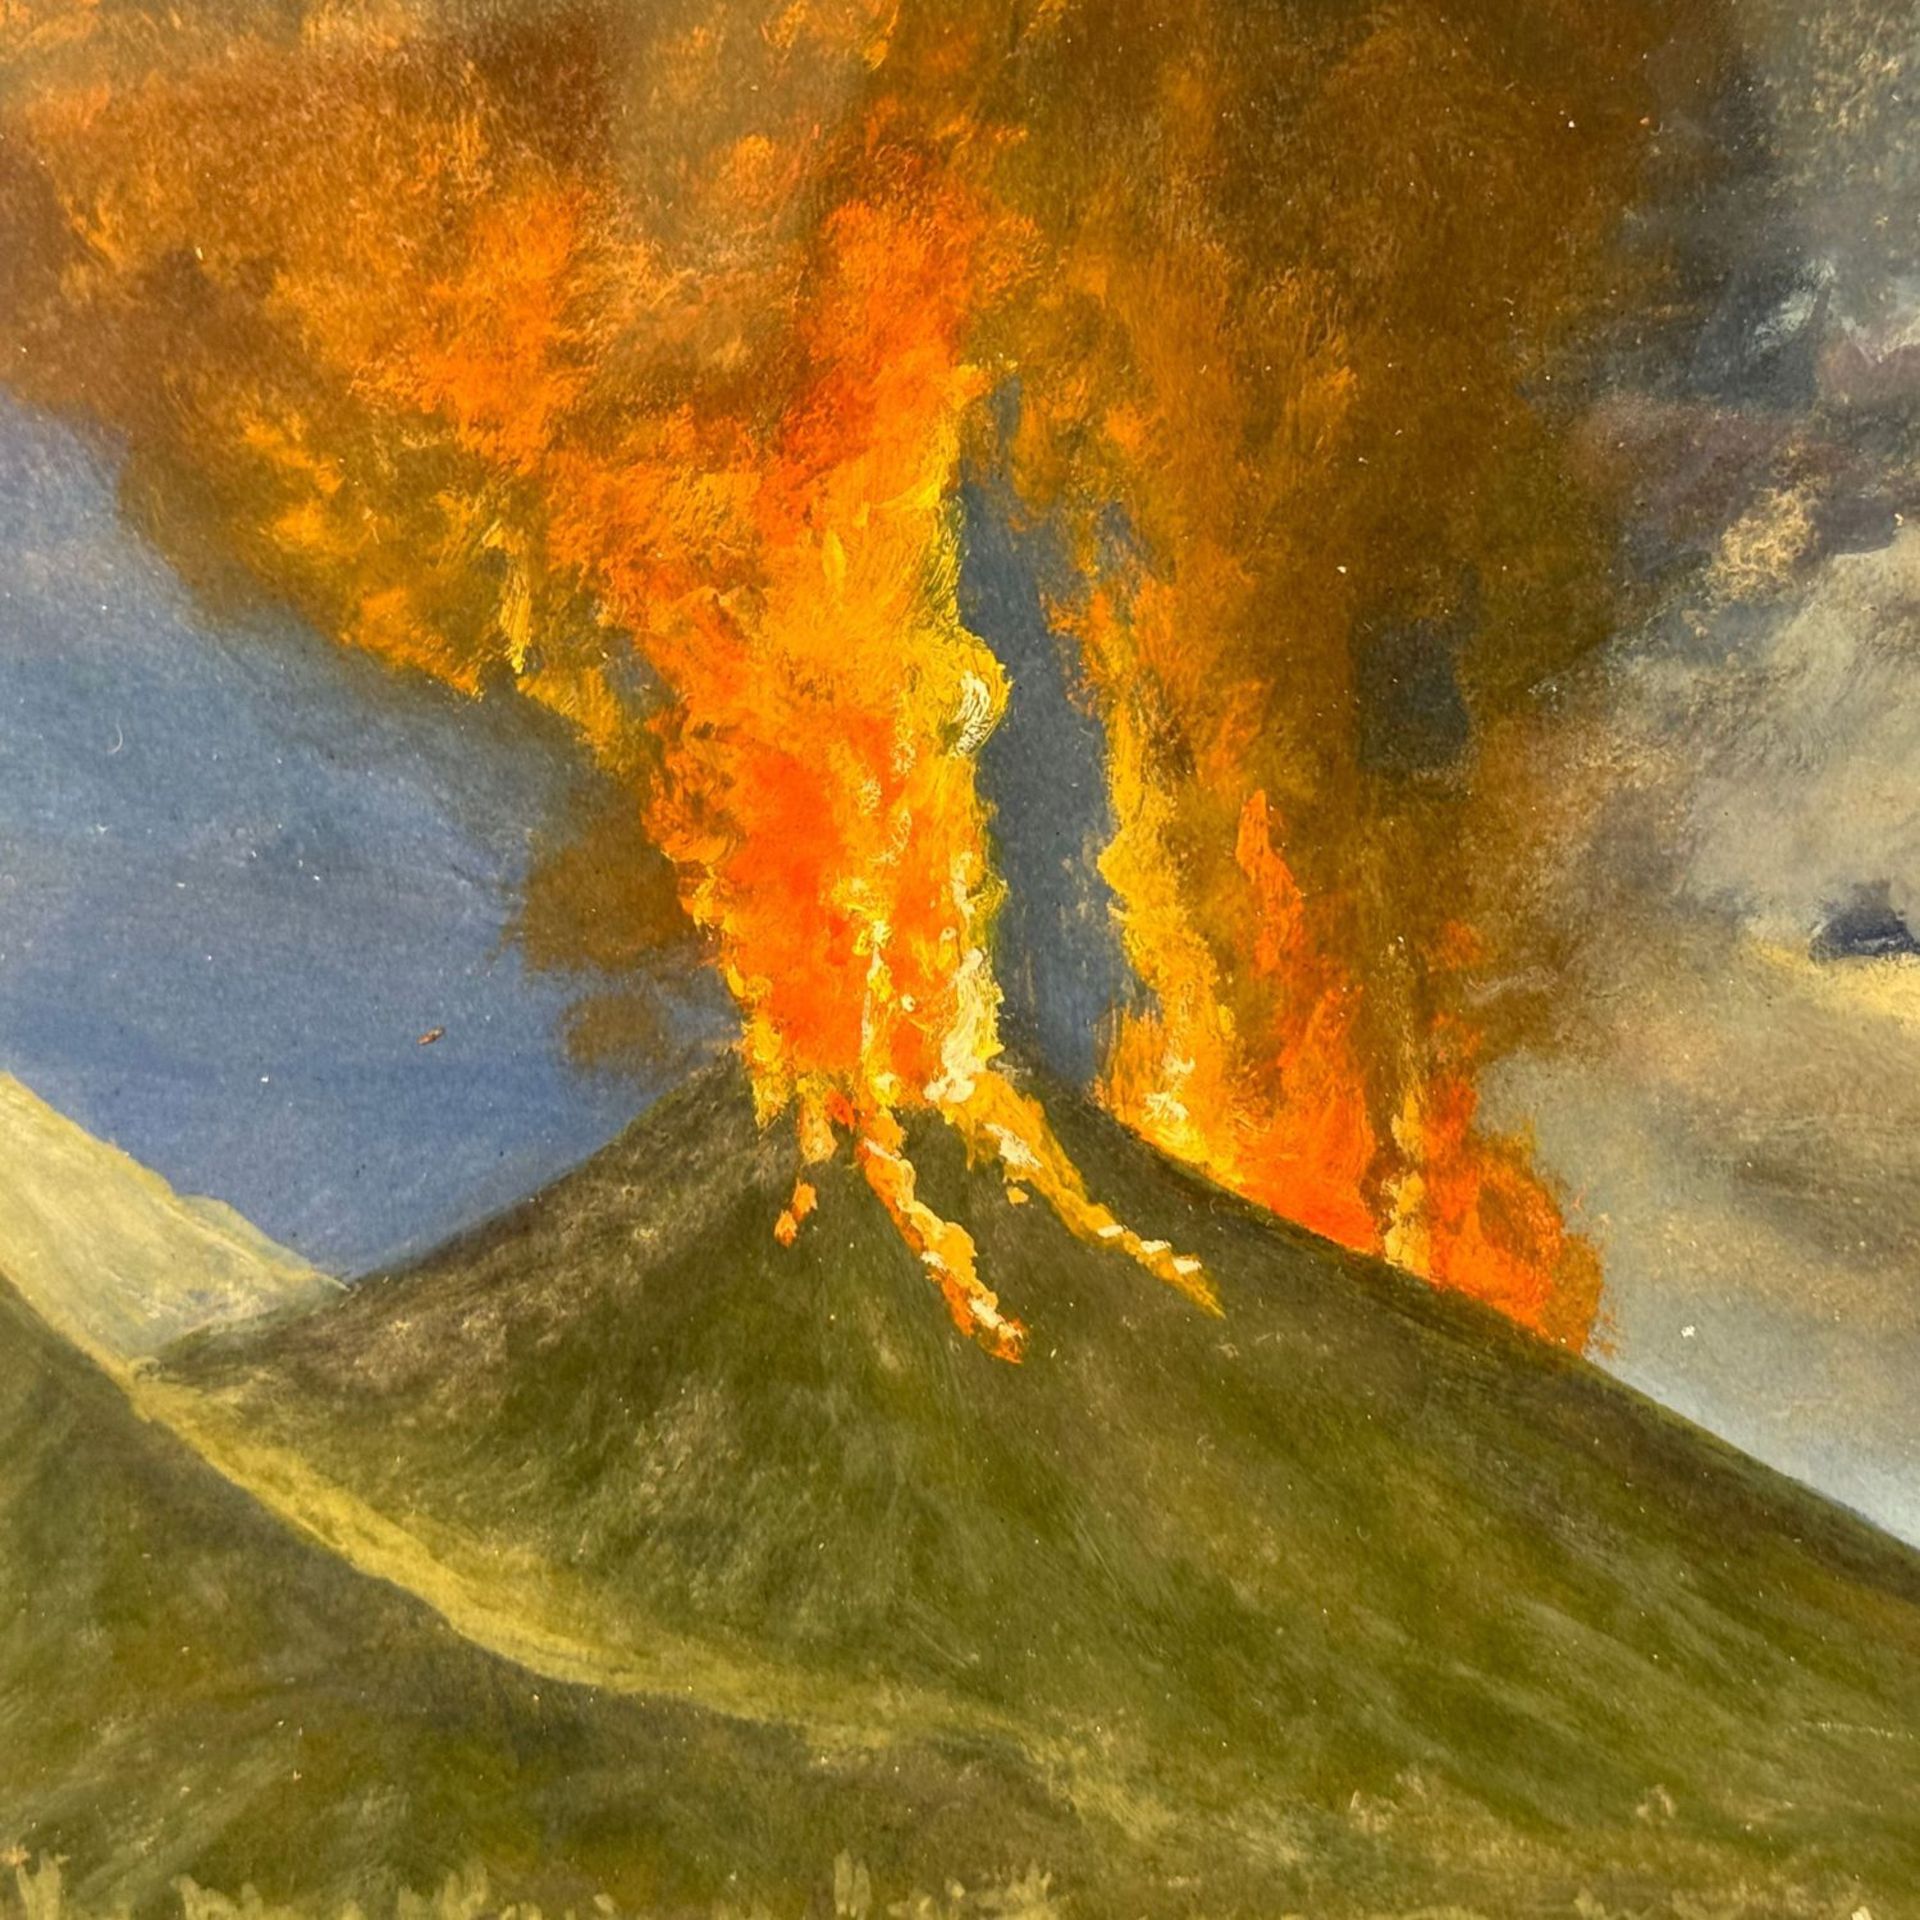 Eruption of Mount Vesuvius in Naples - Image 2 of 9